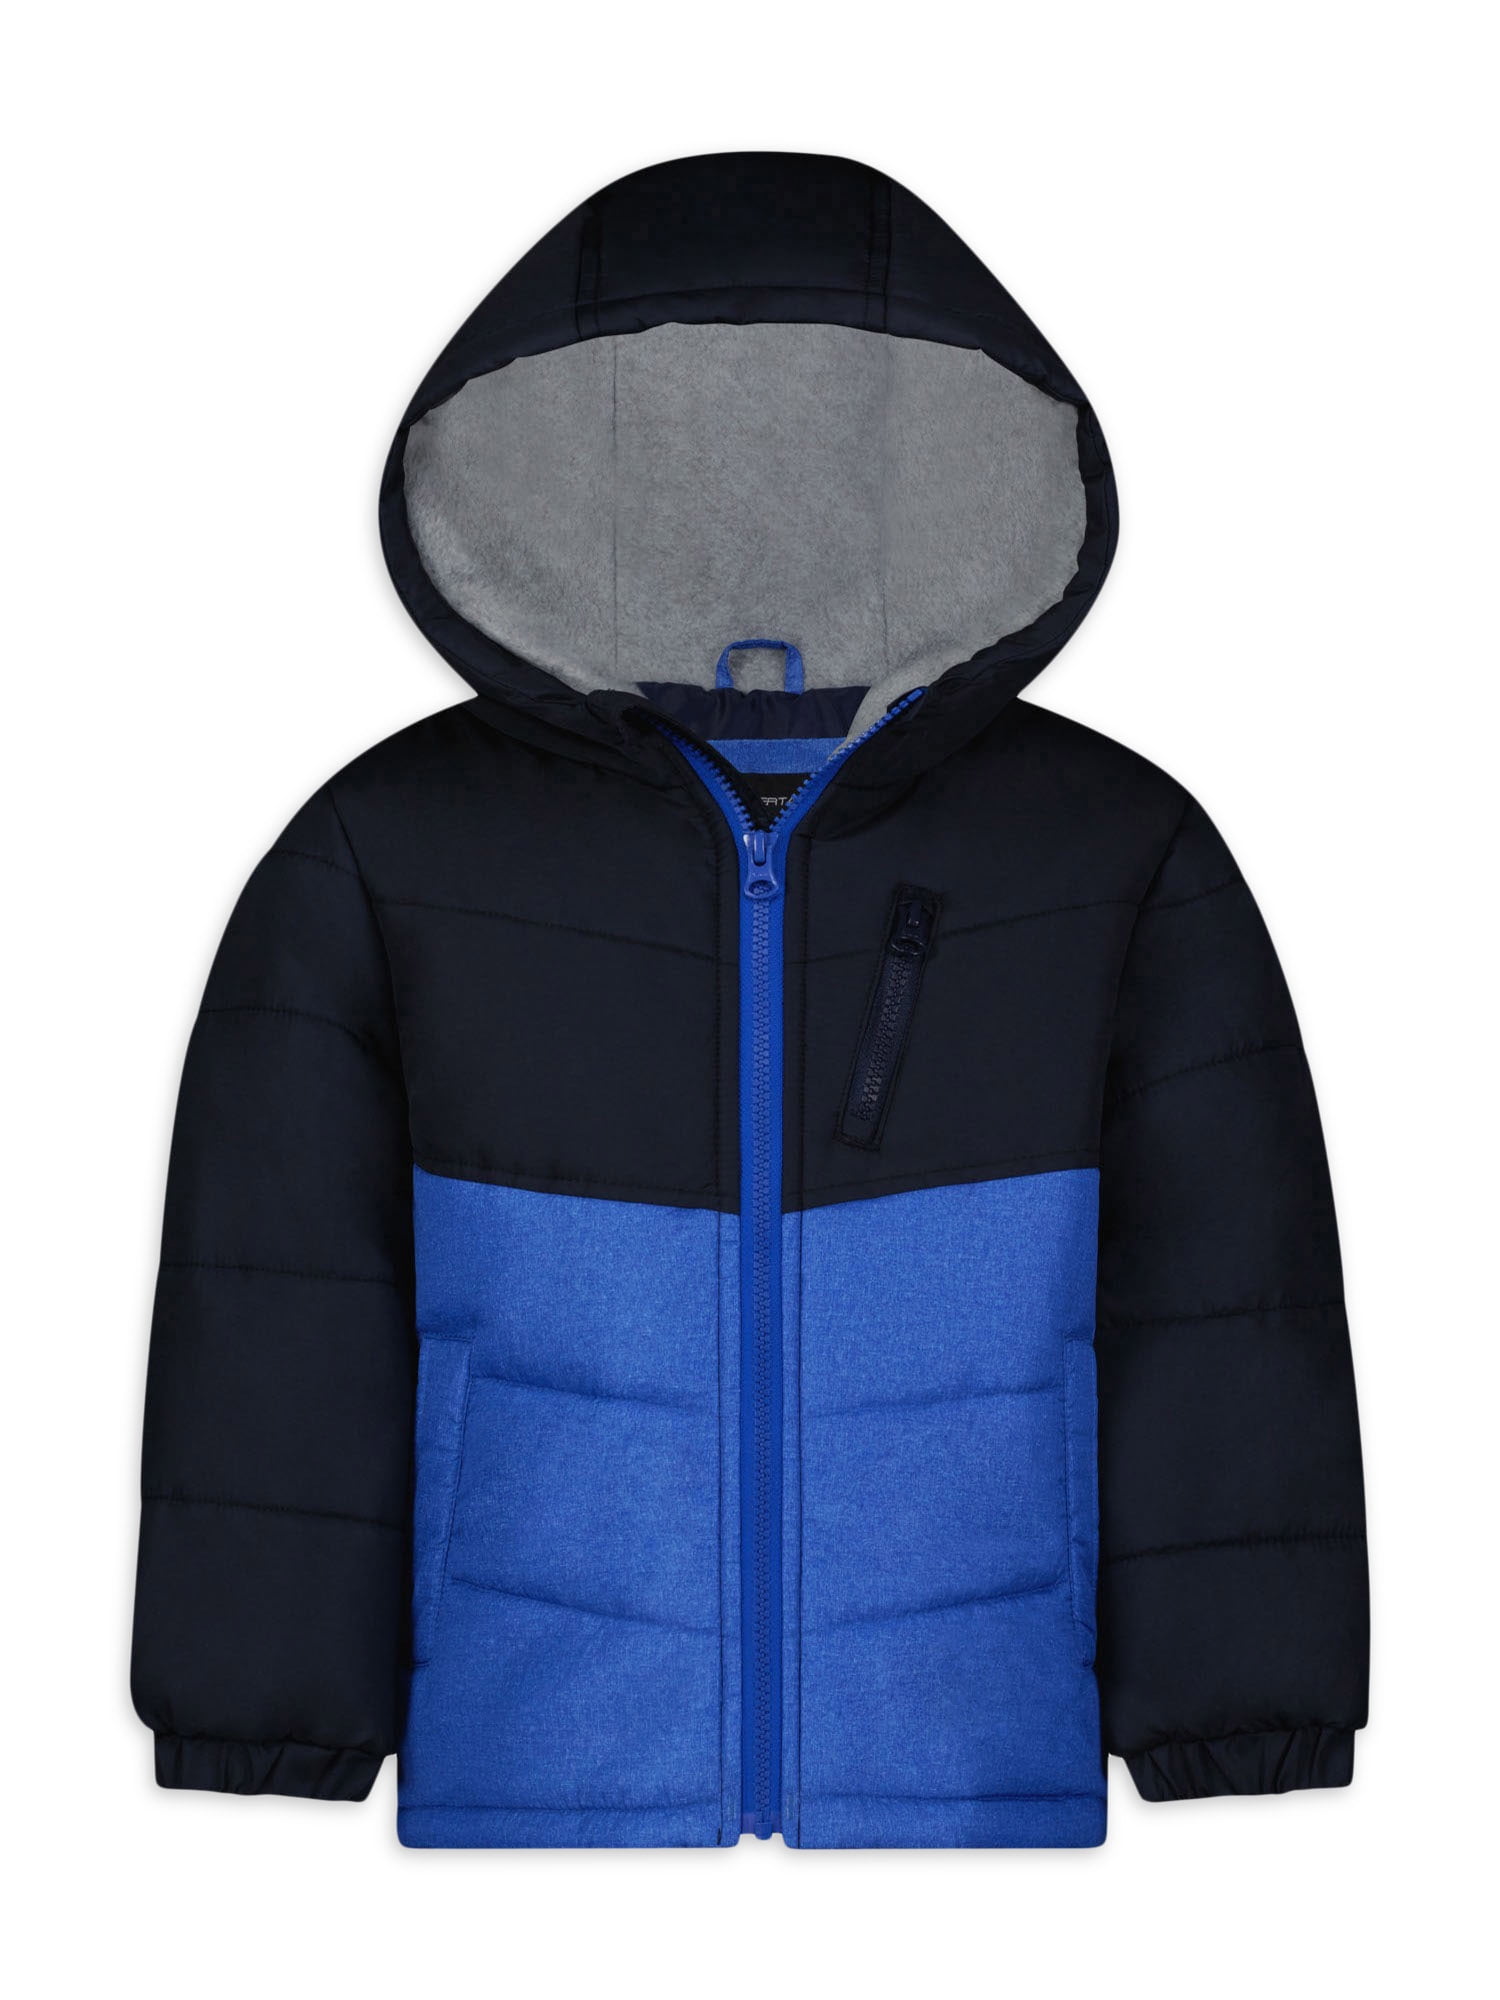 Weathertamer Boys Colorblock Puffer Jacket, Sizes 4-16 - Walmart.com